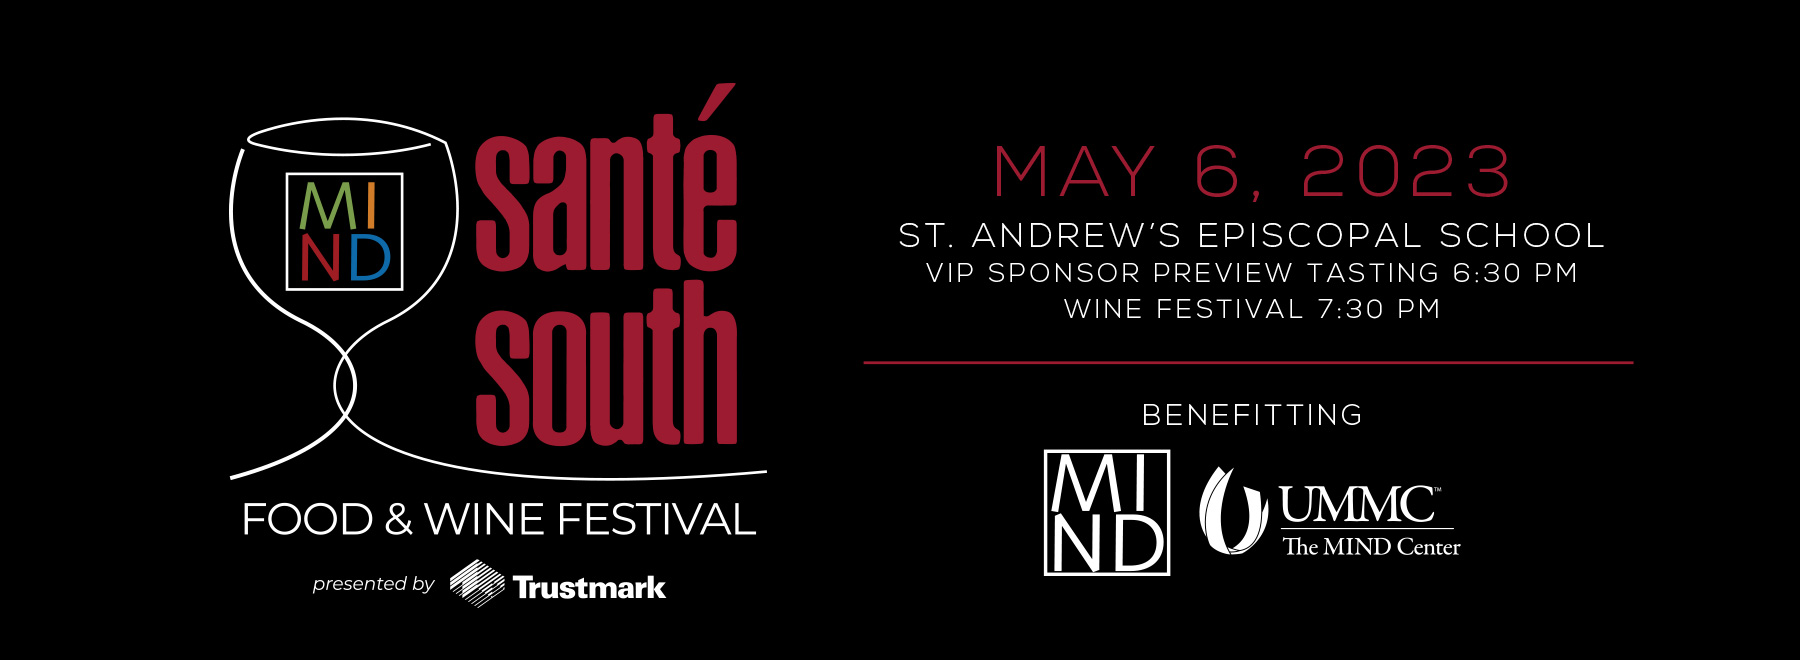 Sante South Wine Festival - May 7,2022